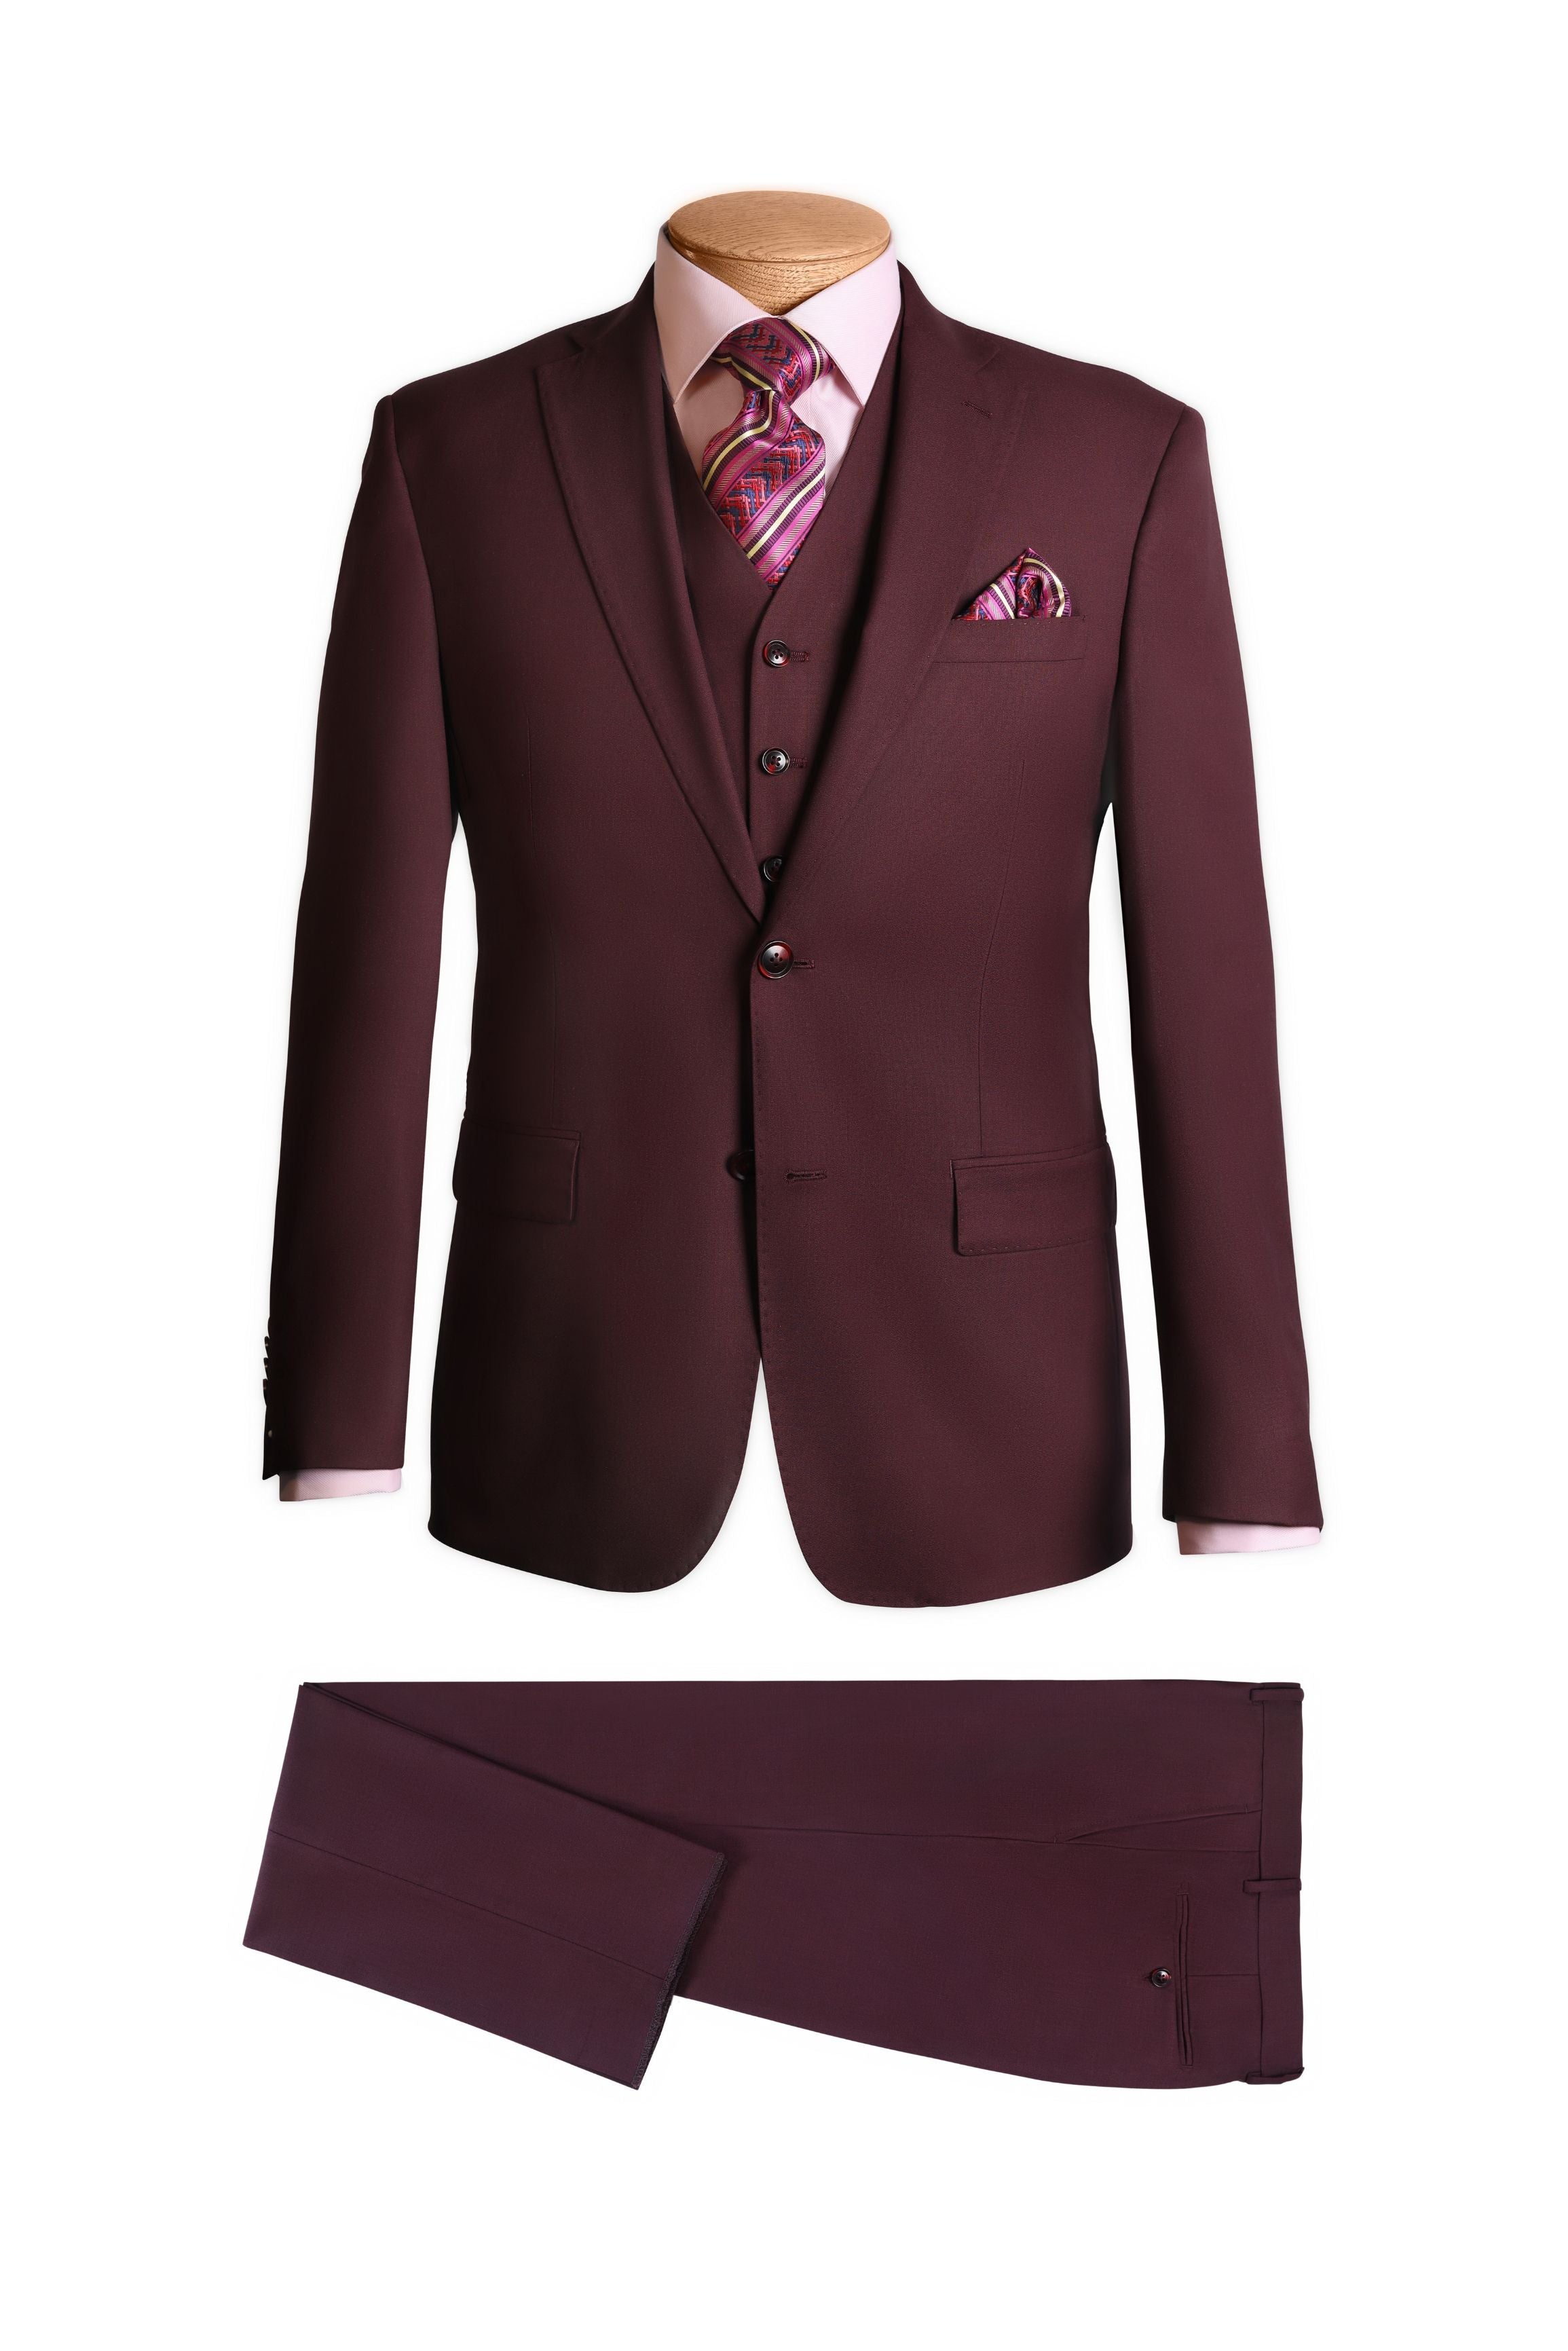 Wine 3 Piece Modern Suit - Mastroianni Fashions